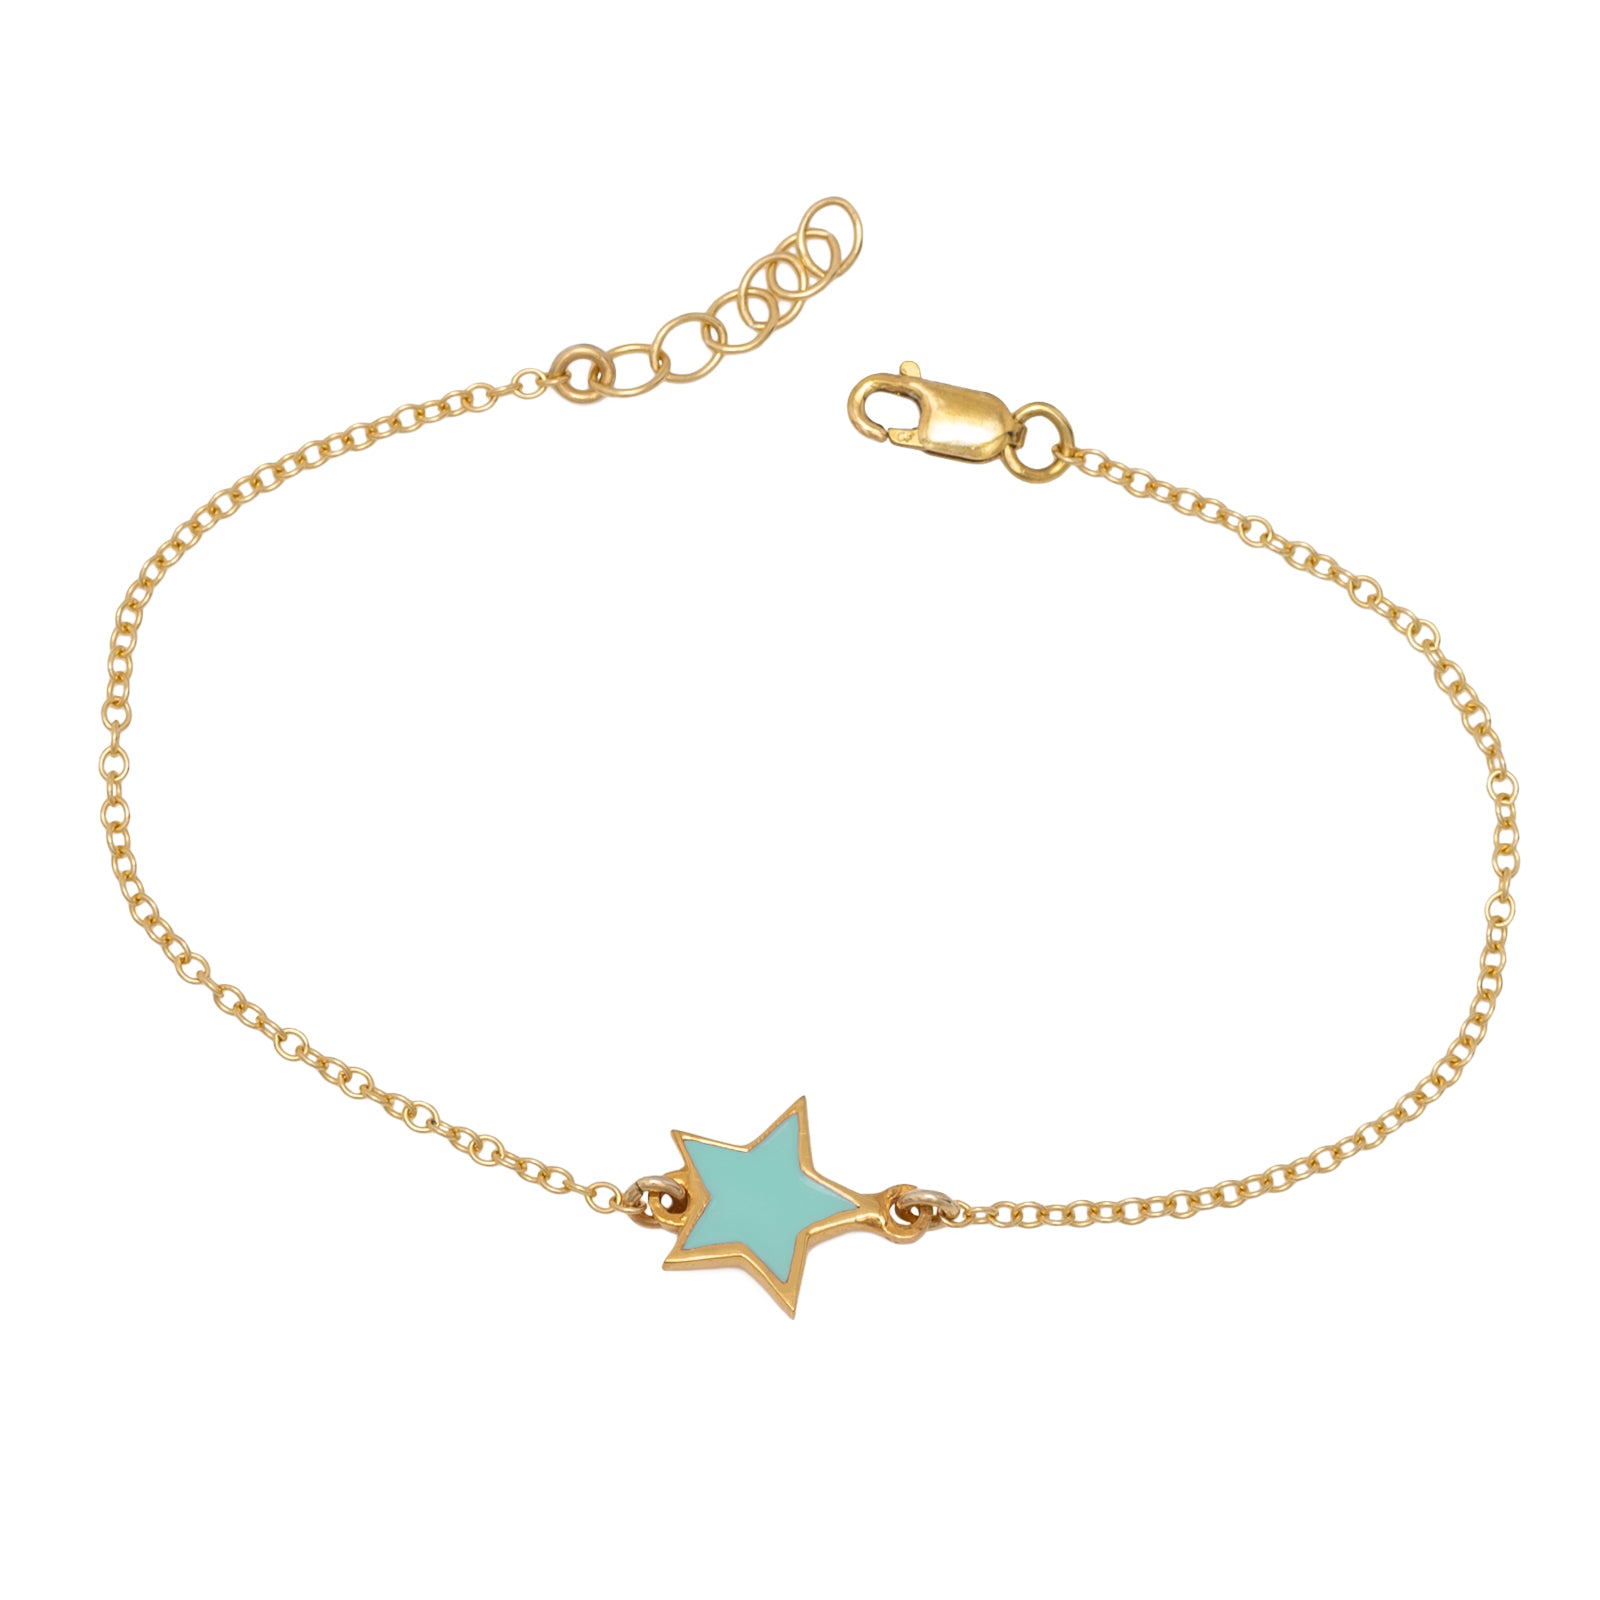 mint green star gold bracelet in 14k gold filled